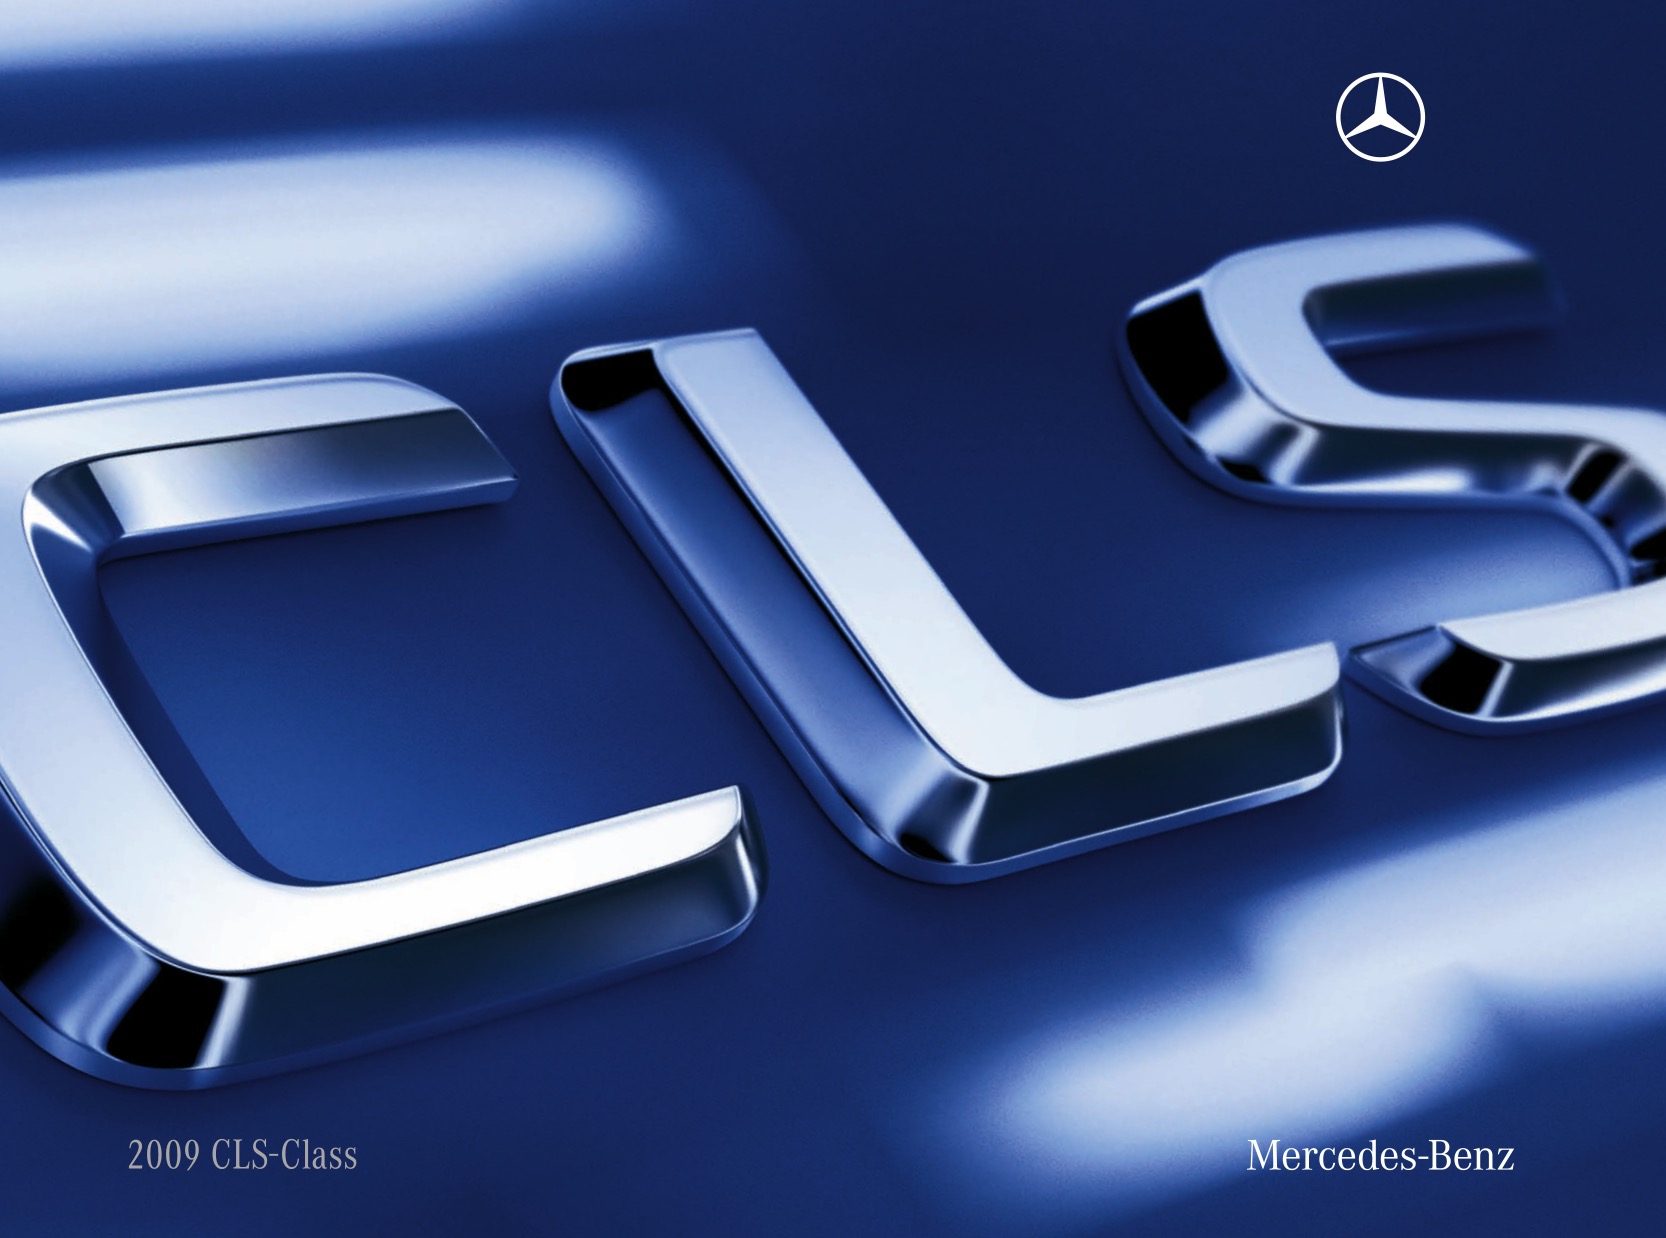 2009 Mercedes-Benz CLS-Class Brochure